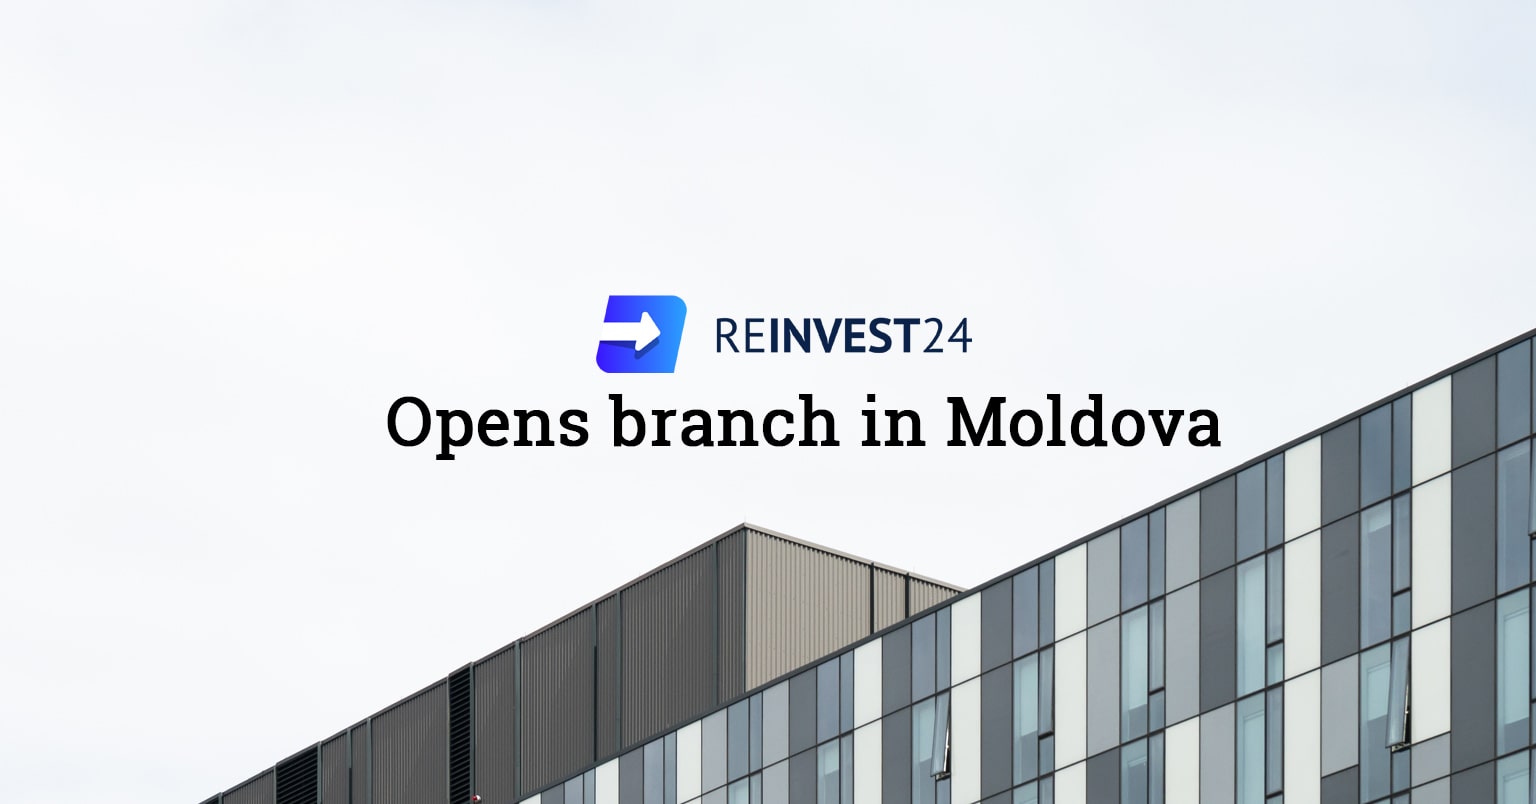 Reinvest24 in Moldova